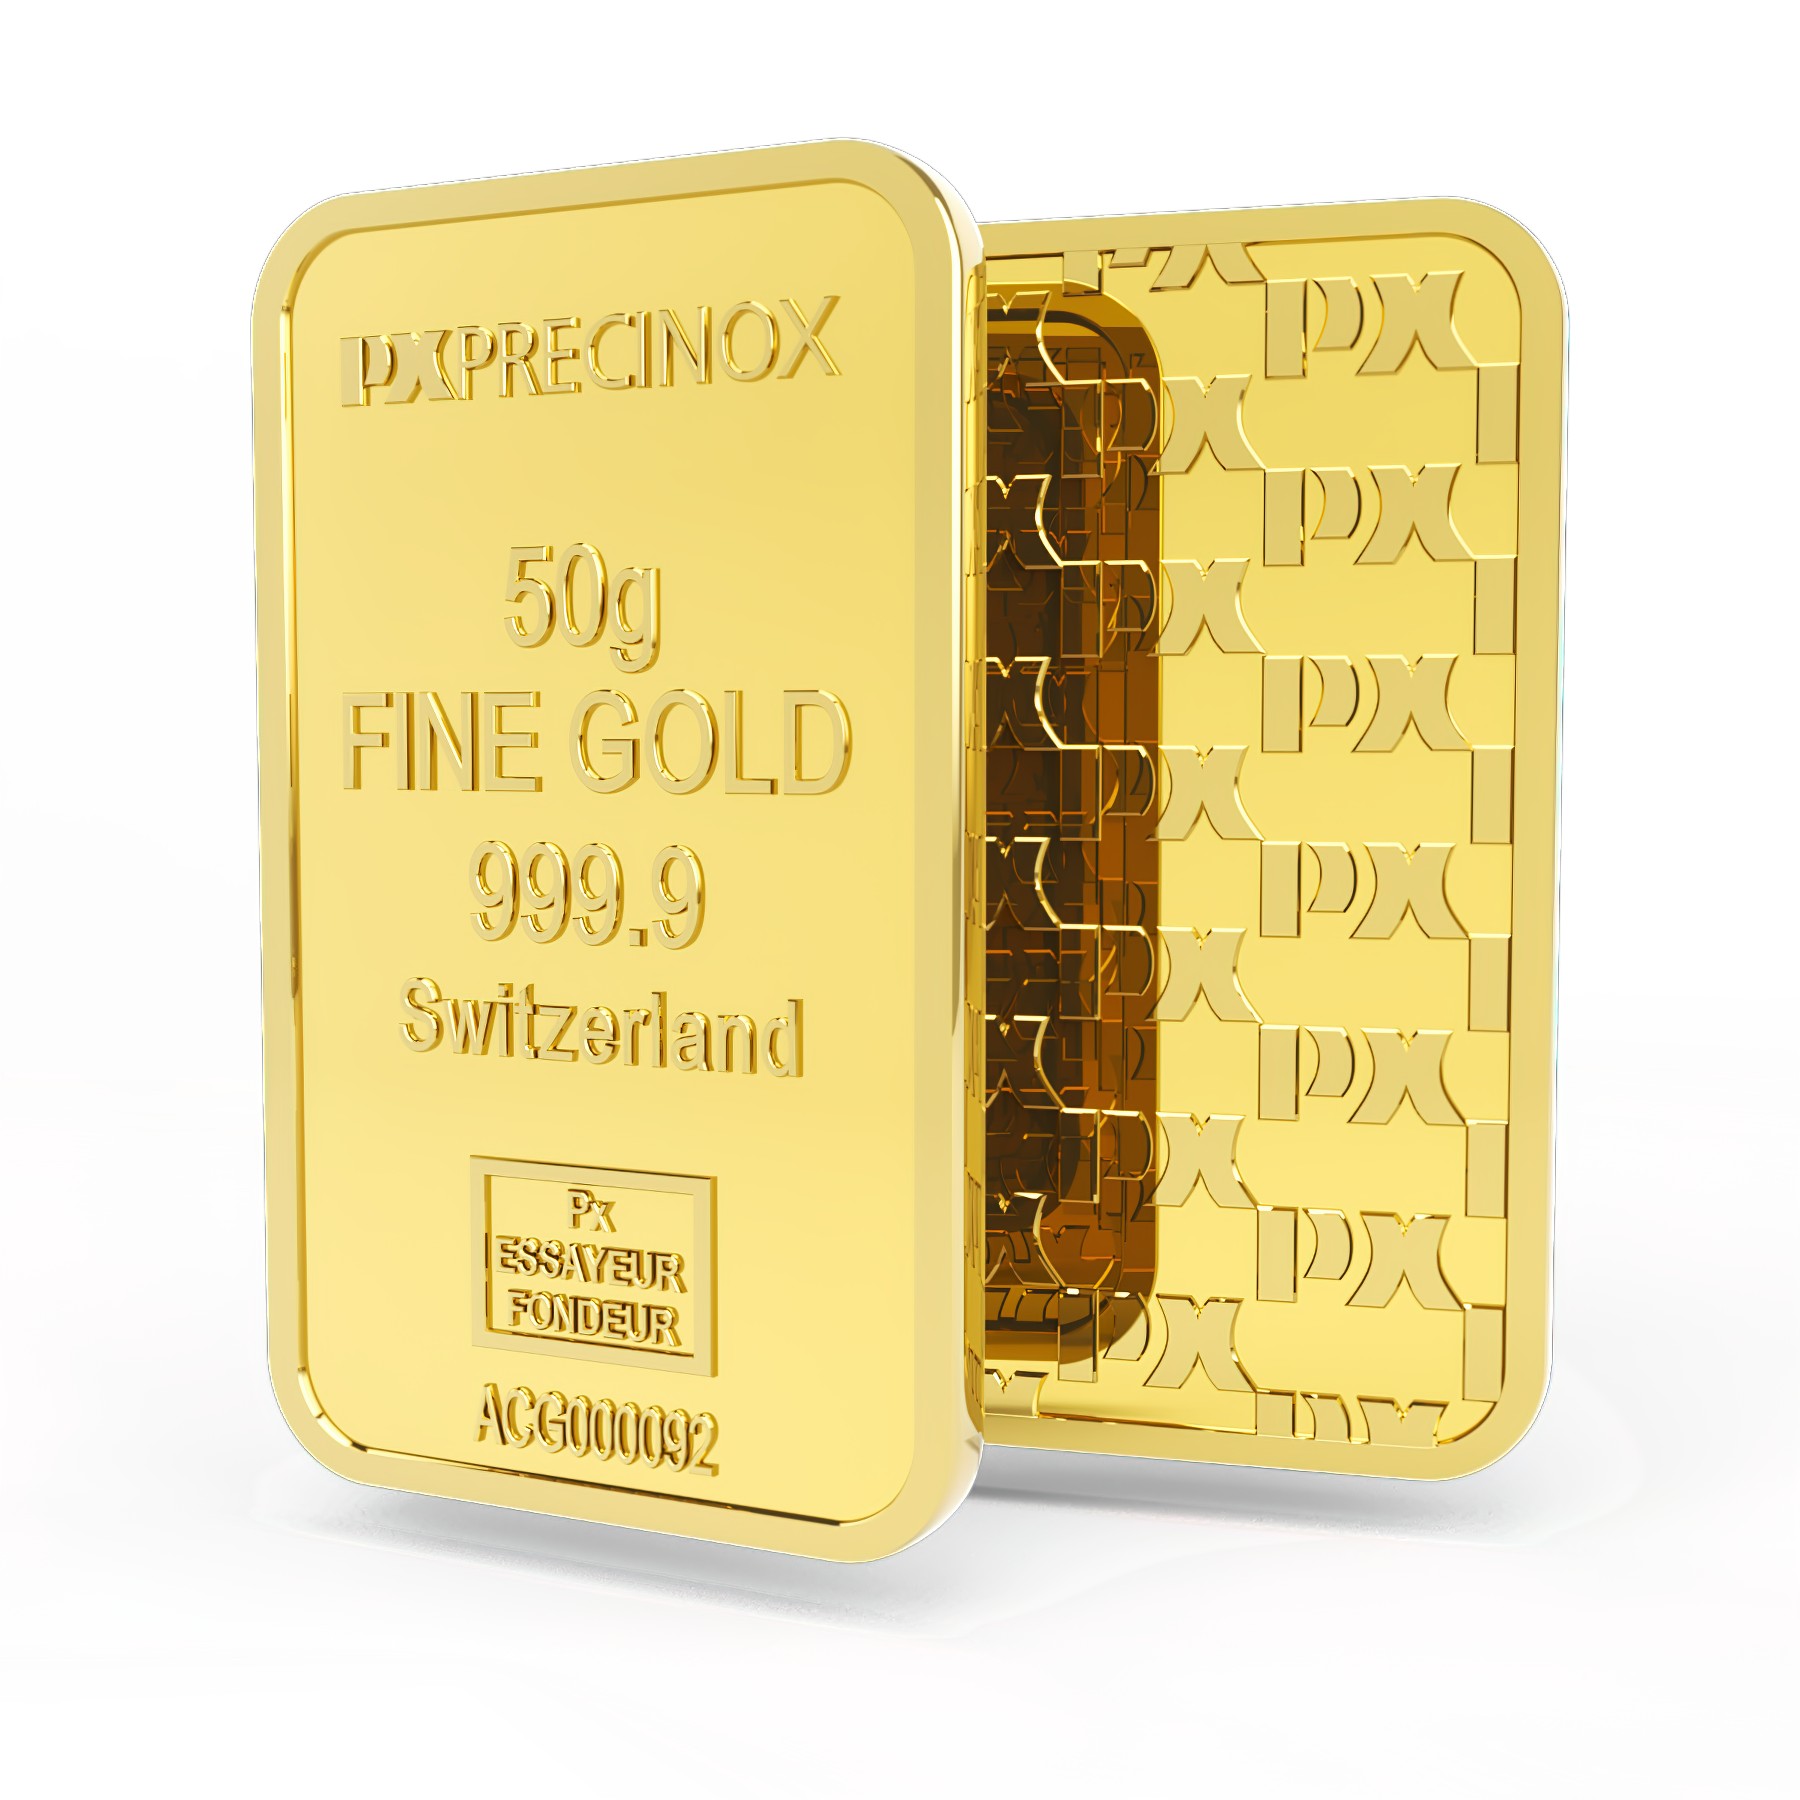 Lingou aur 50 gr, Elvetia, Fine Gold 999,9